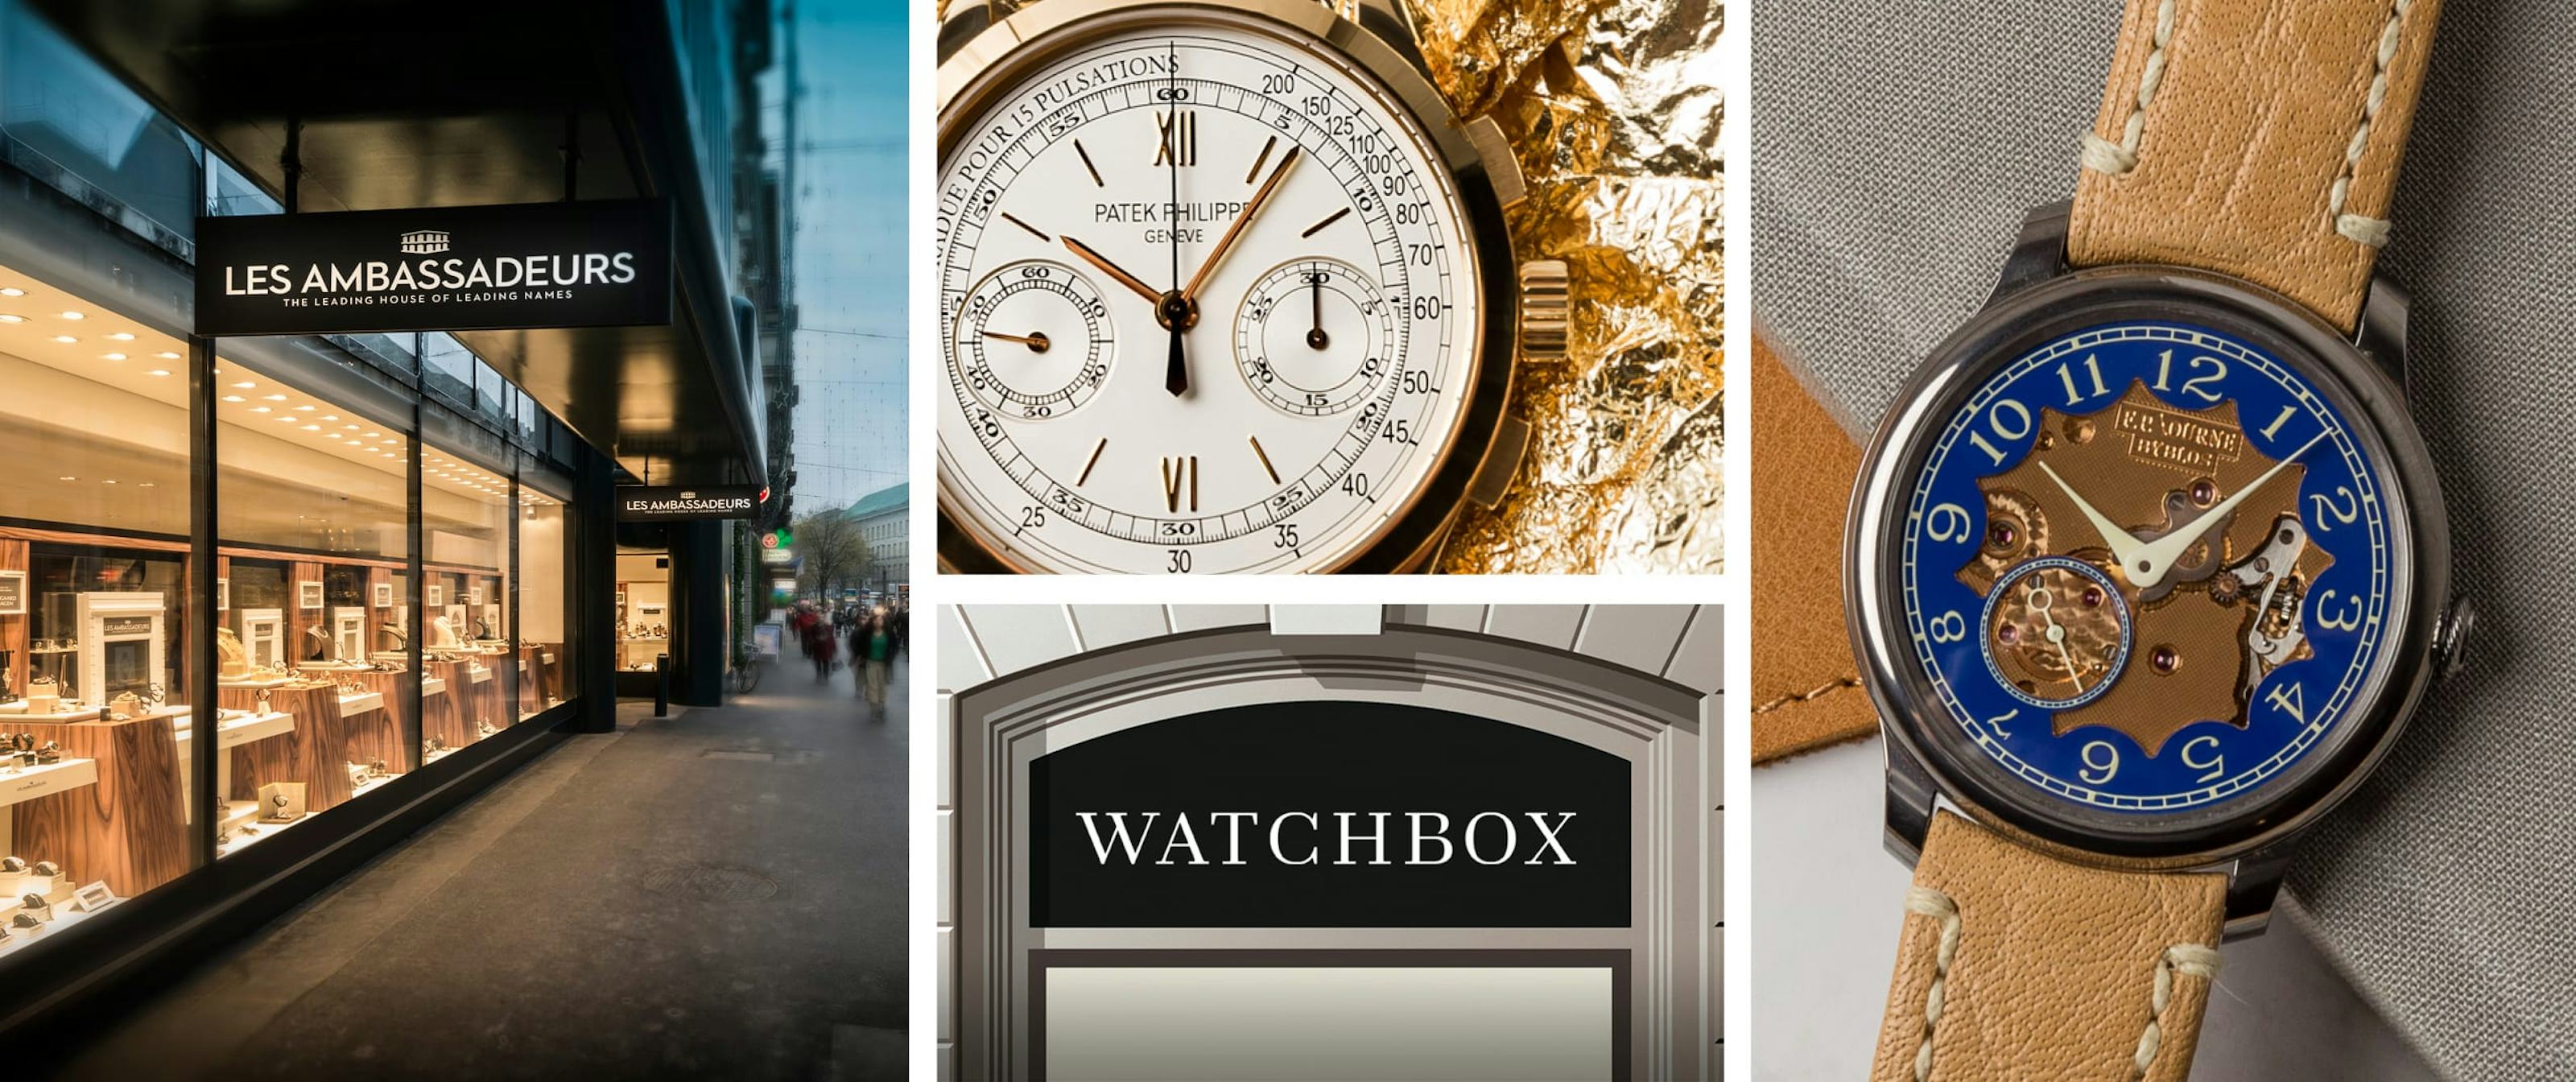 WatchBox Expands Global Footprint in Partnership with Leading Swiss Watch Retailer Les Ambassadeurs